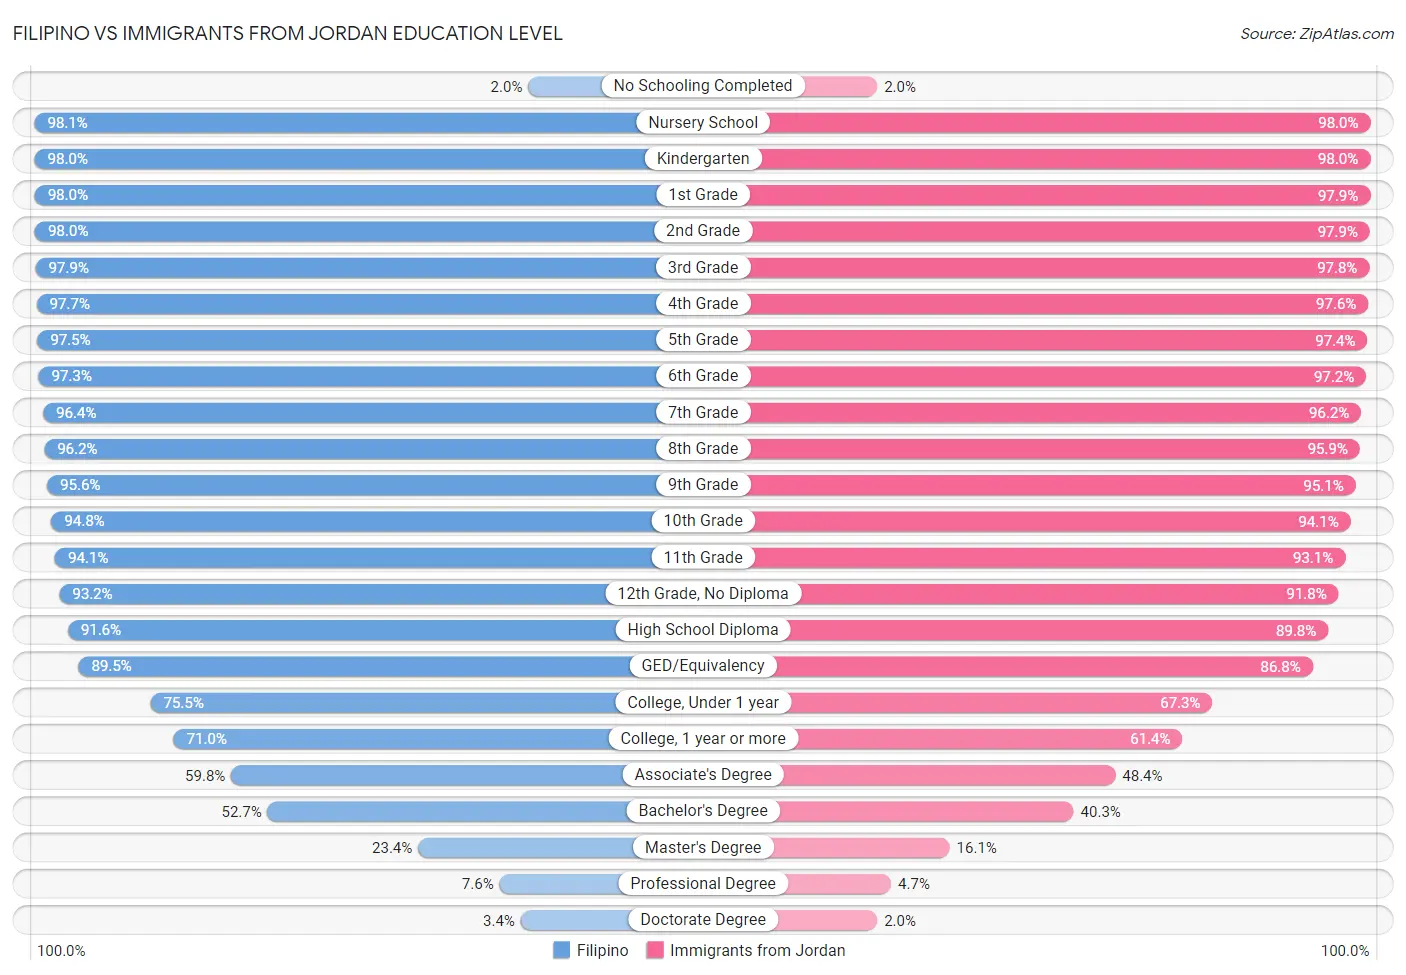 Filipino vs Immigrants from Jordan Education Level